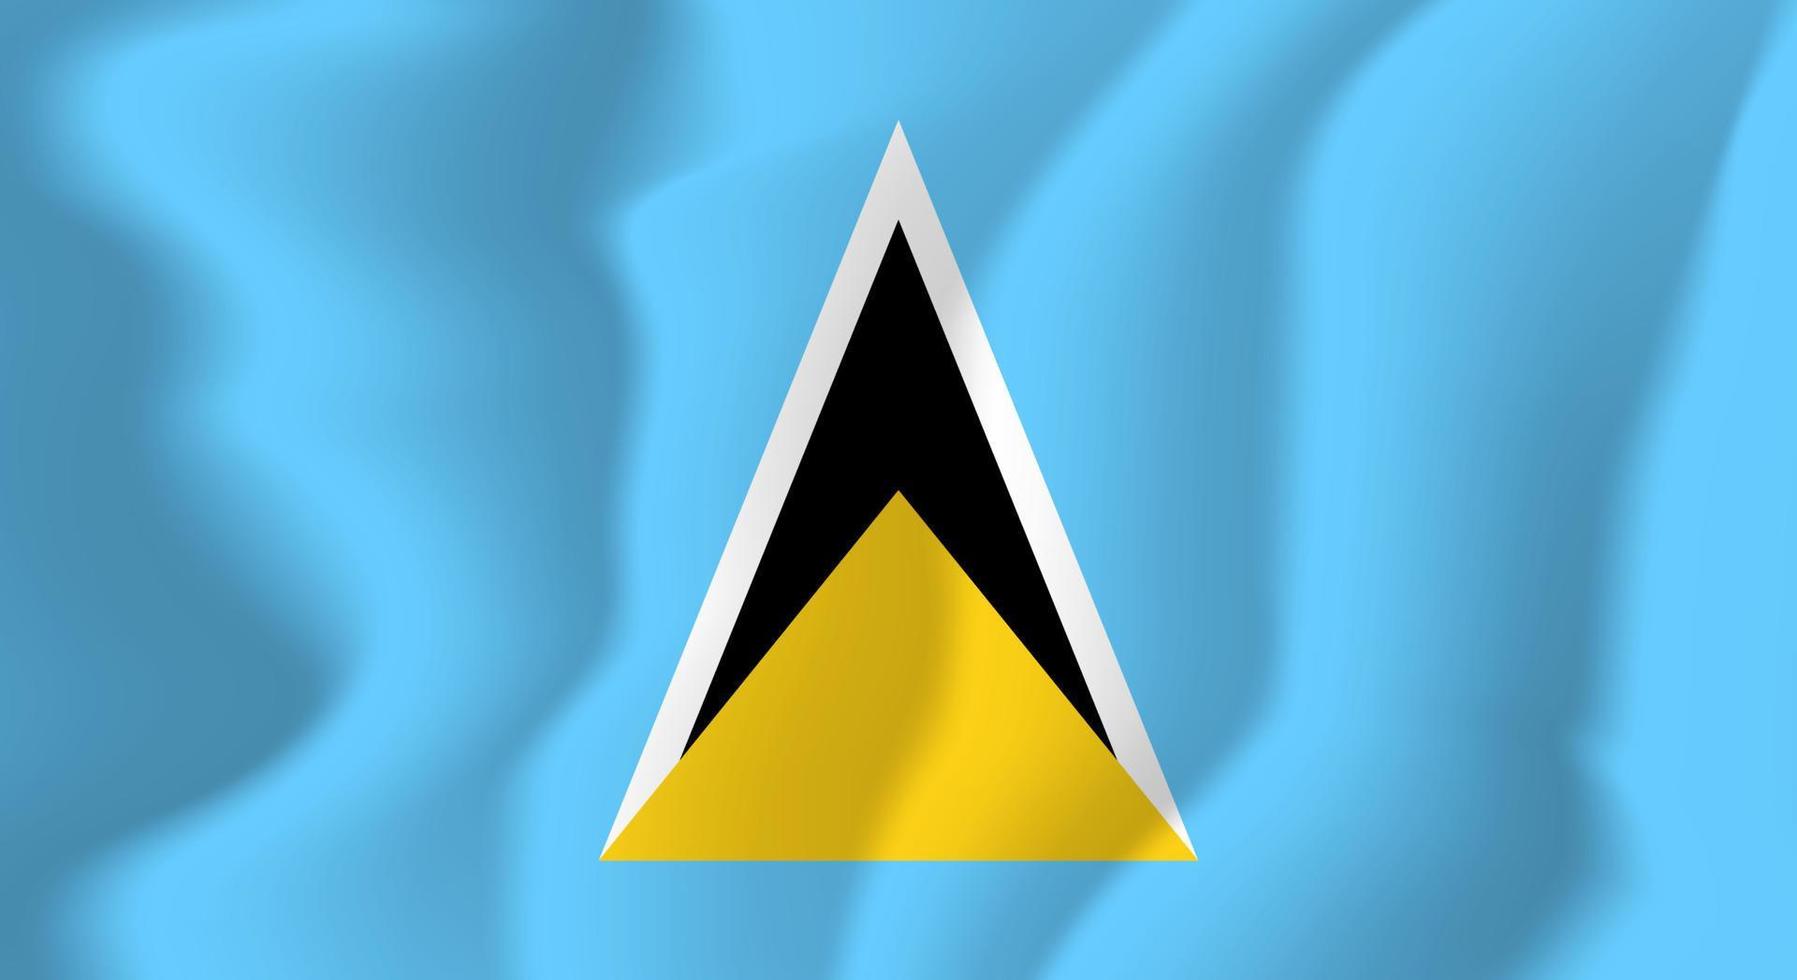 Saint Lucia National Waving Flag Background Illustration vector